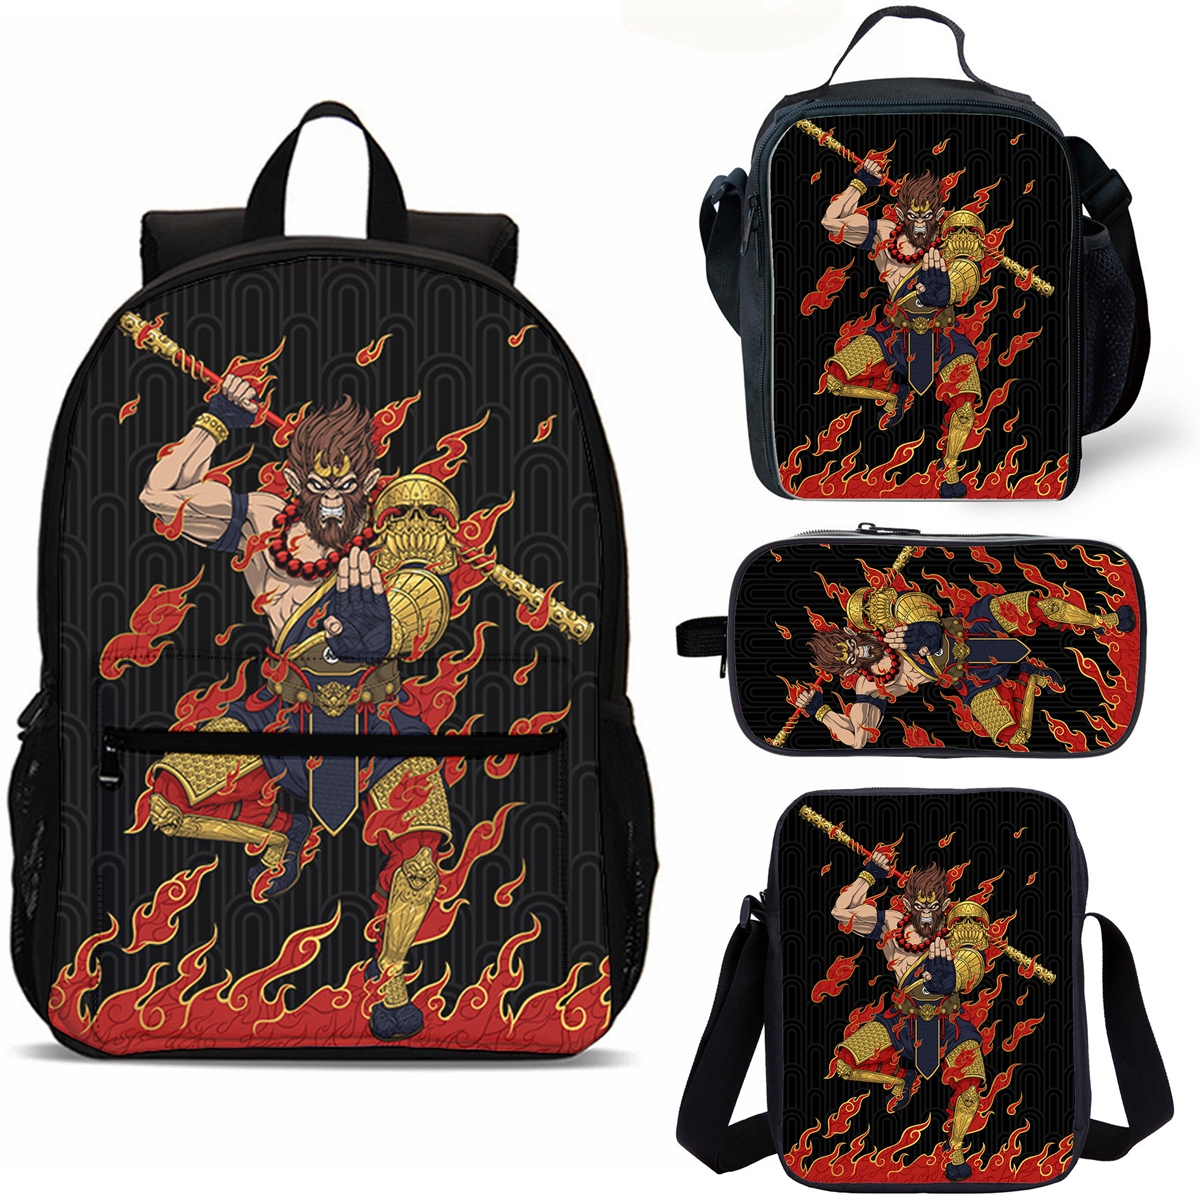 Monkey King School Merch 18" School Backpack Lunch Bag Shoulder Bag Pencil Case